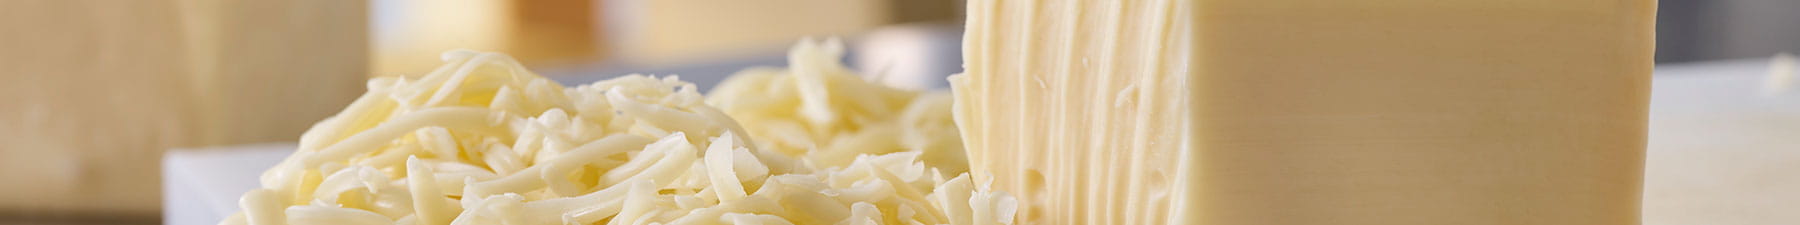 Pasta filata cheese grated